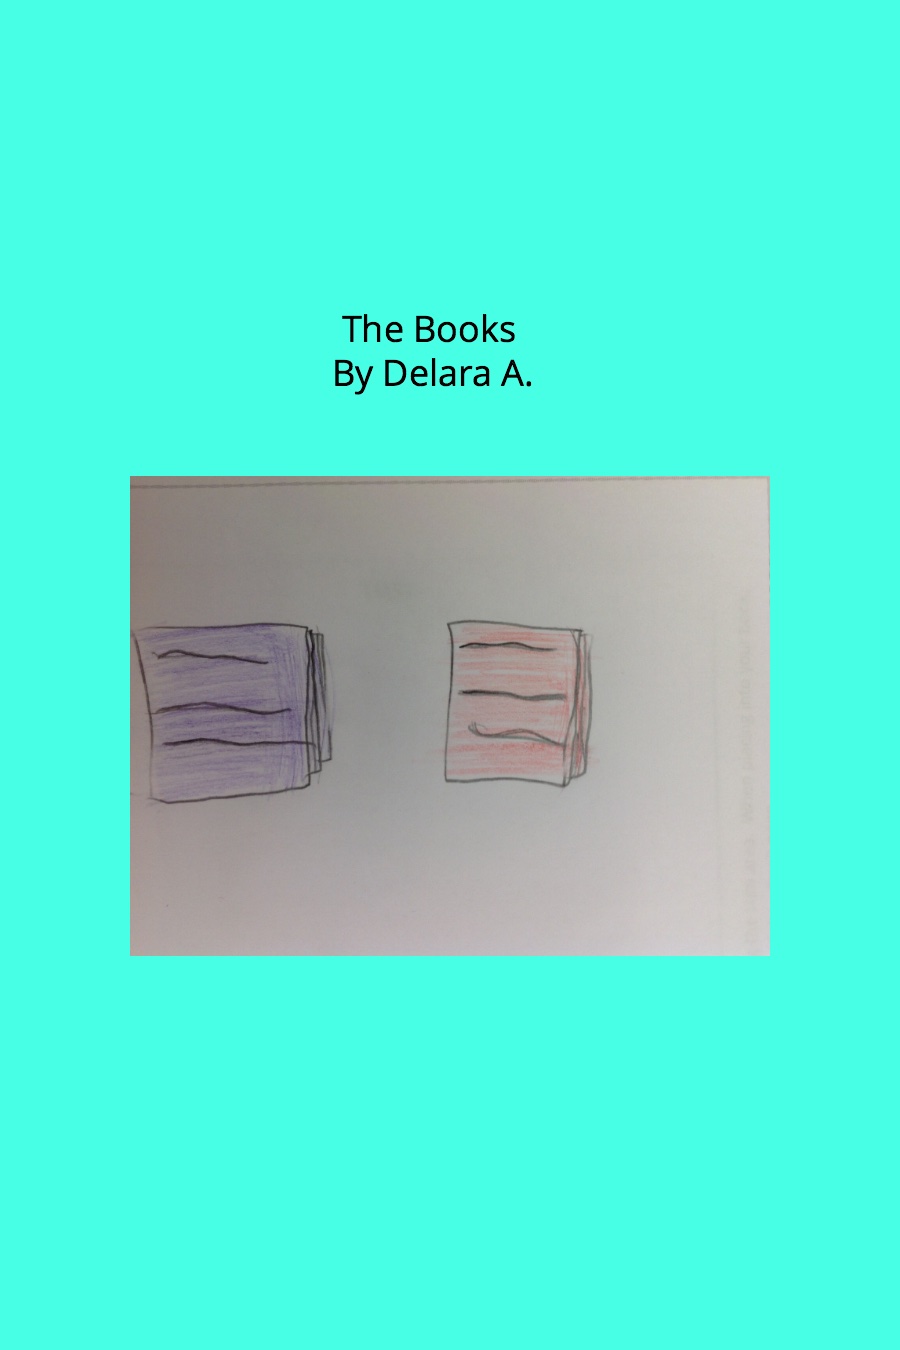 The Books by Delara A